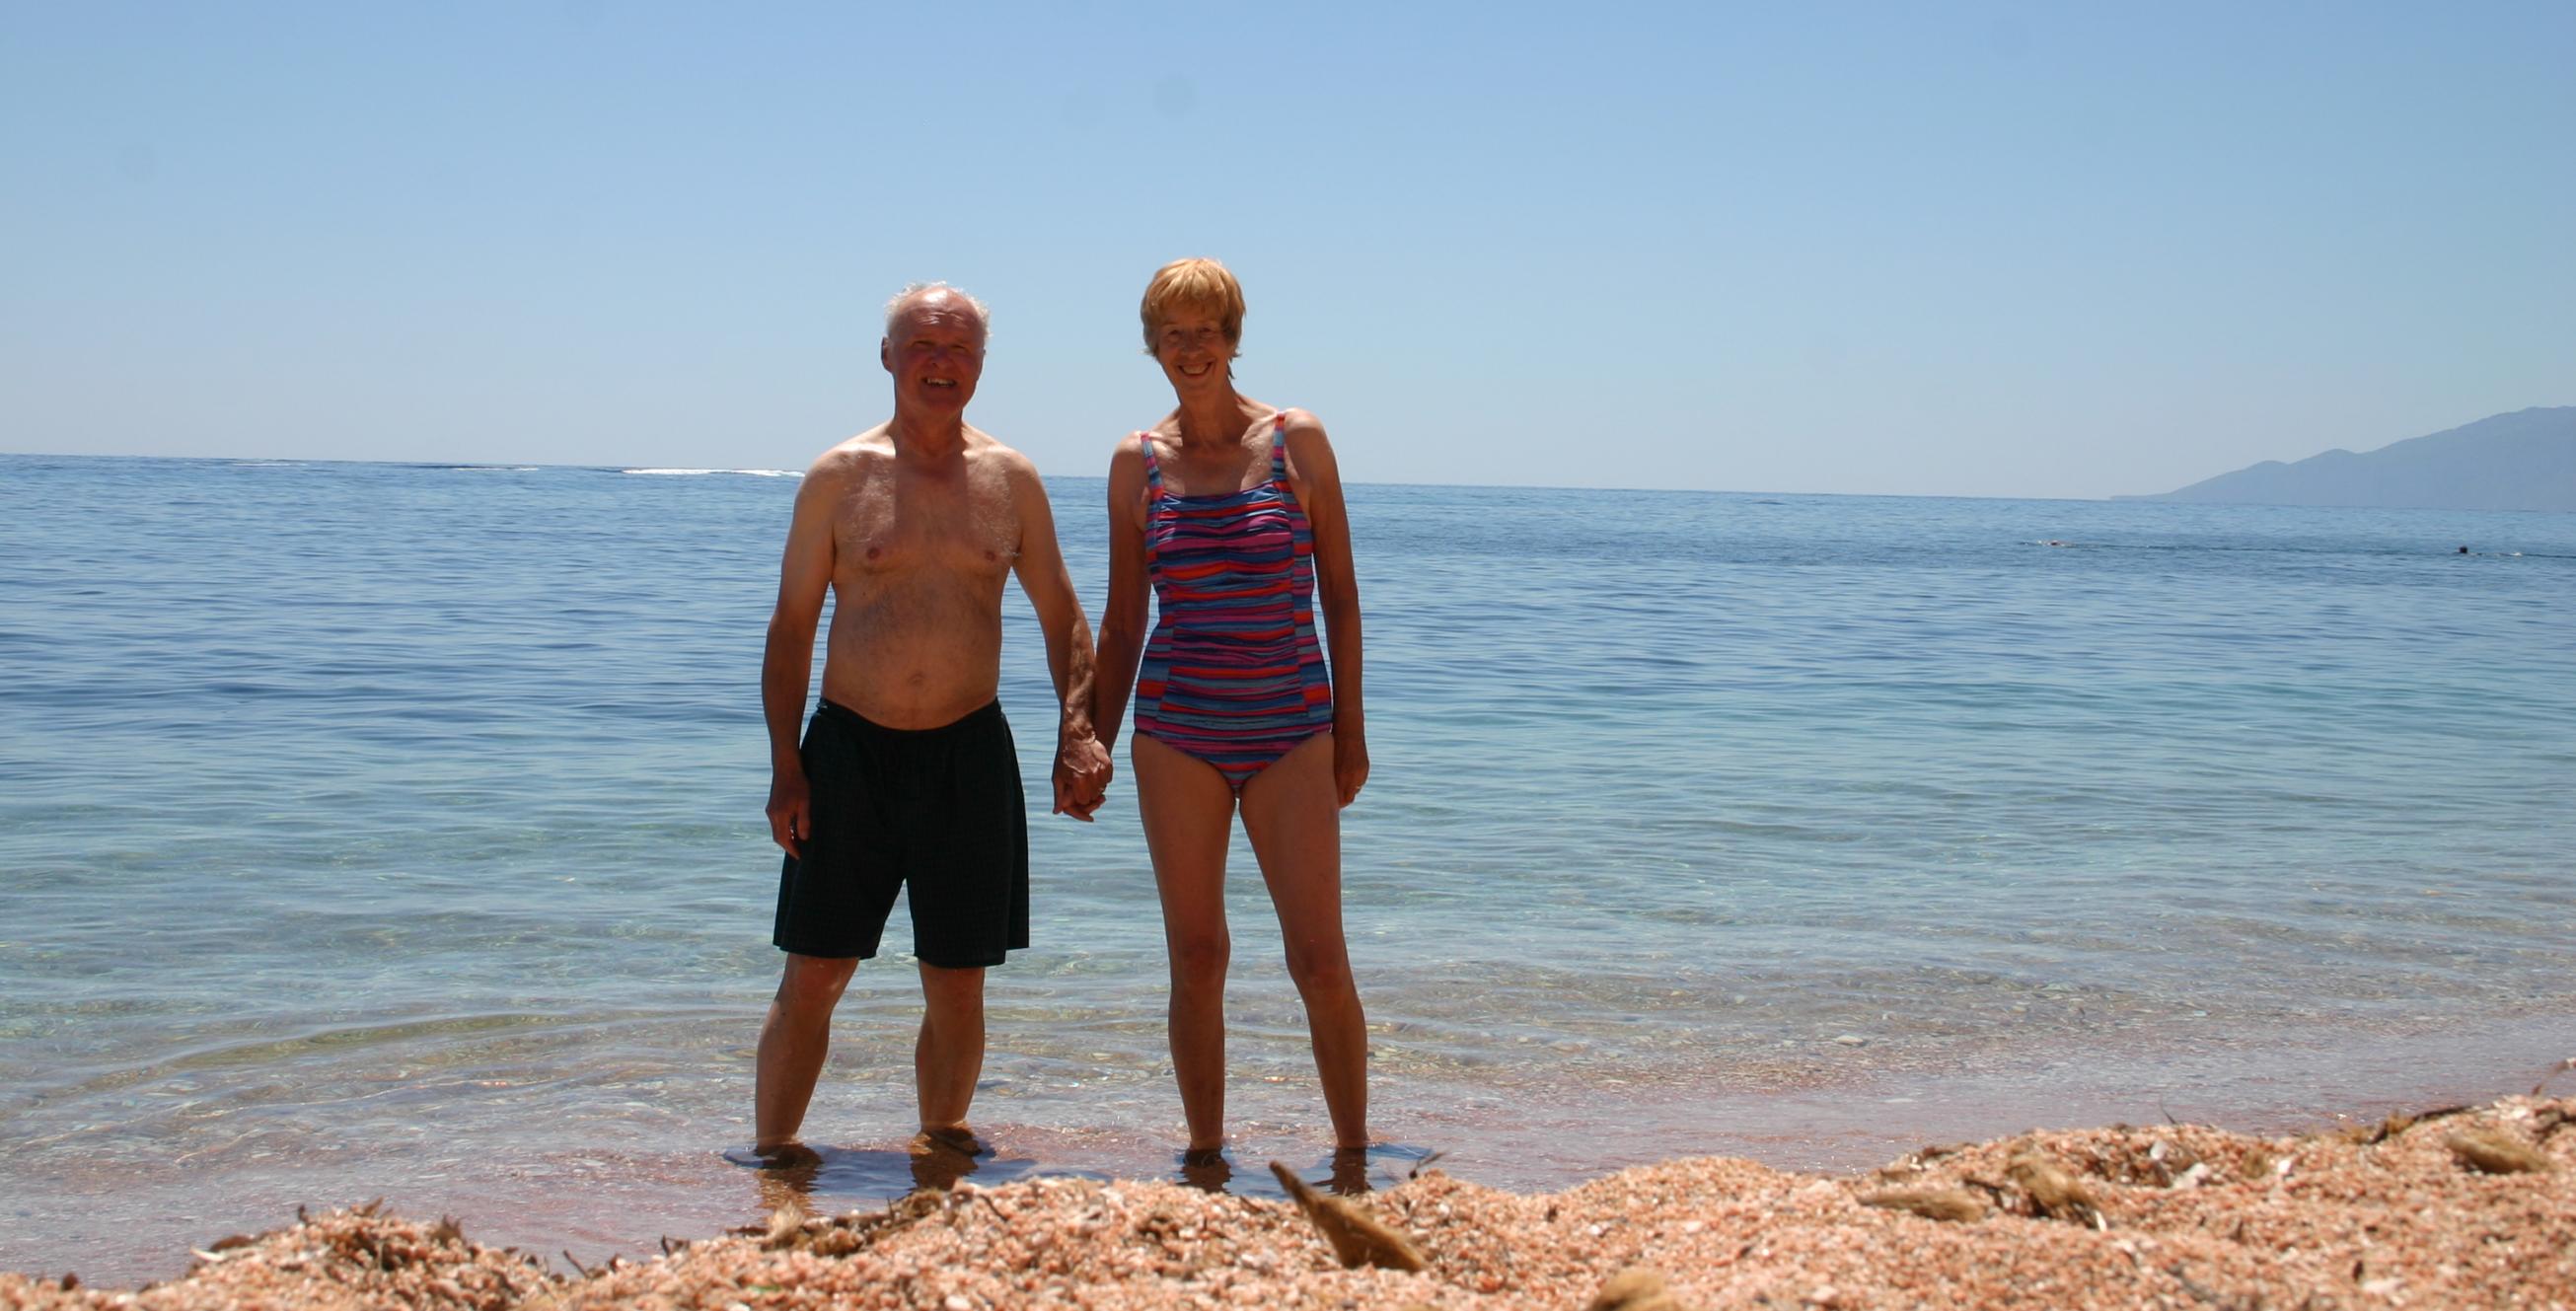 [Sunday 11th June, on the town beach at Cala Gonone, Sardinia.